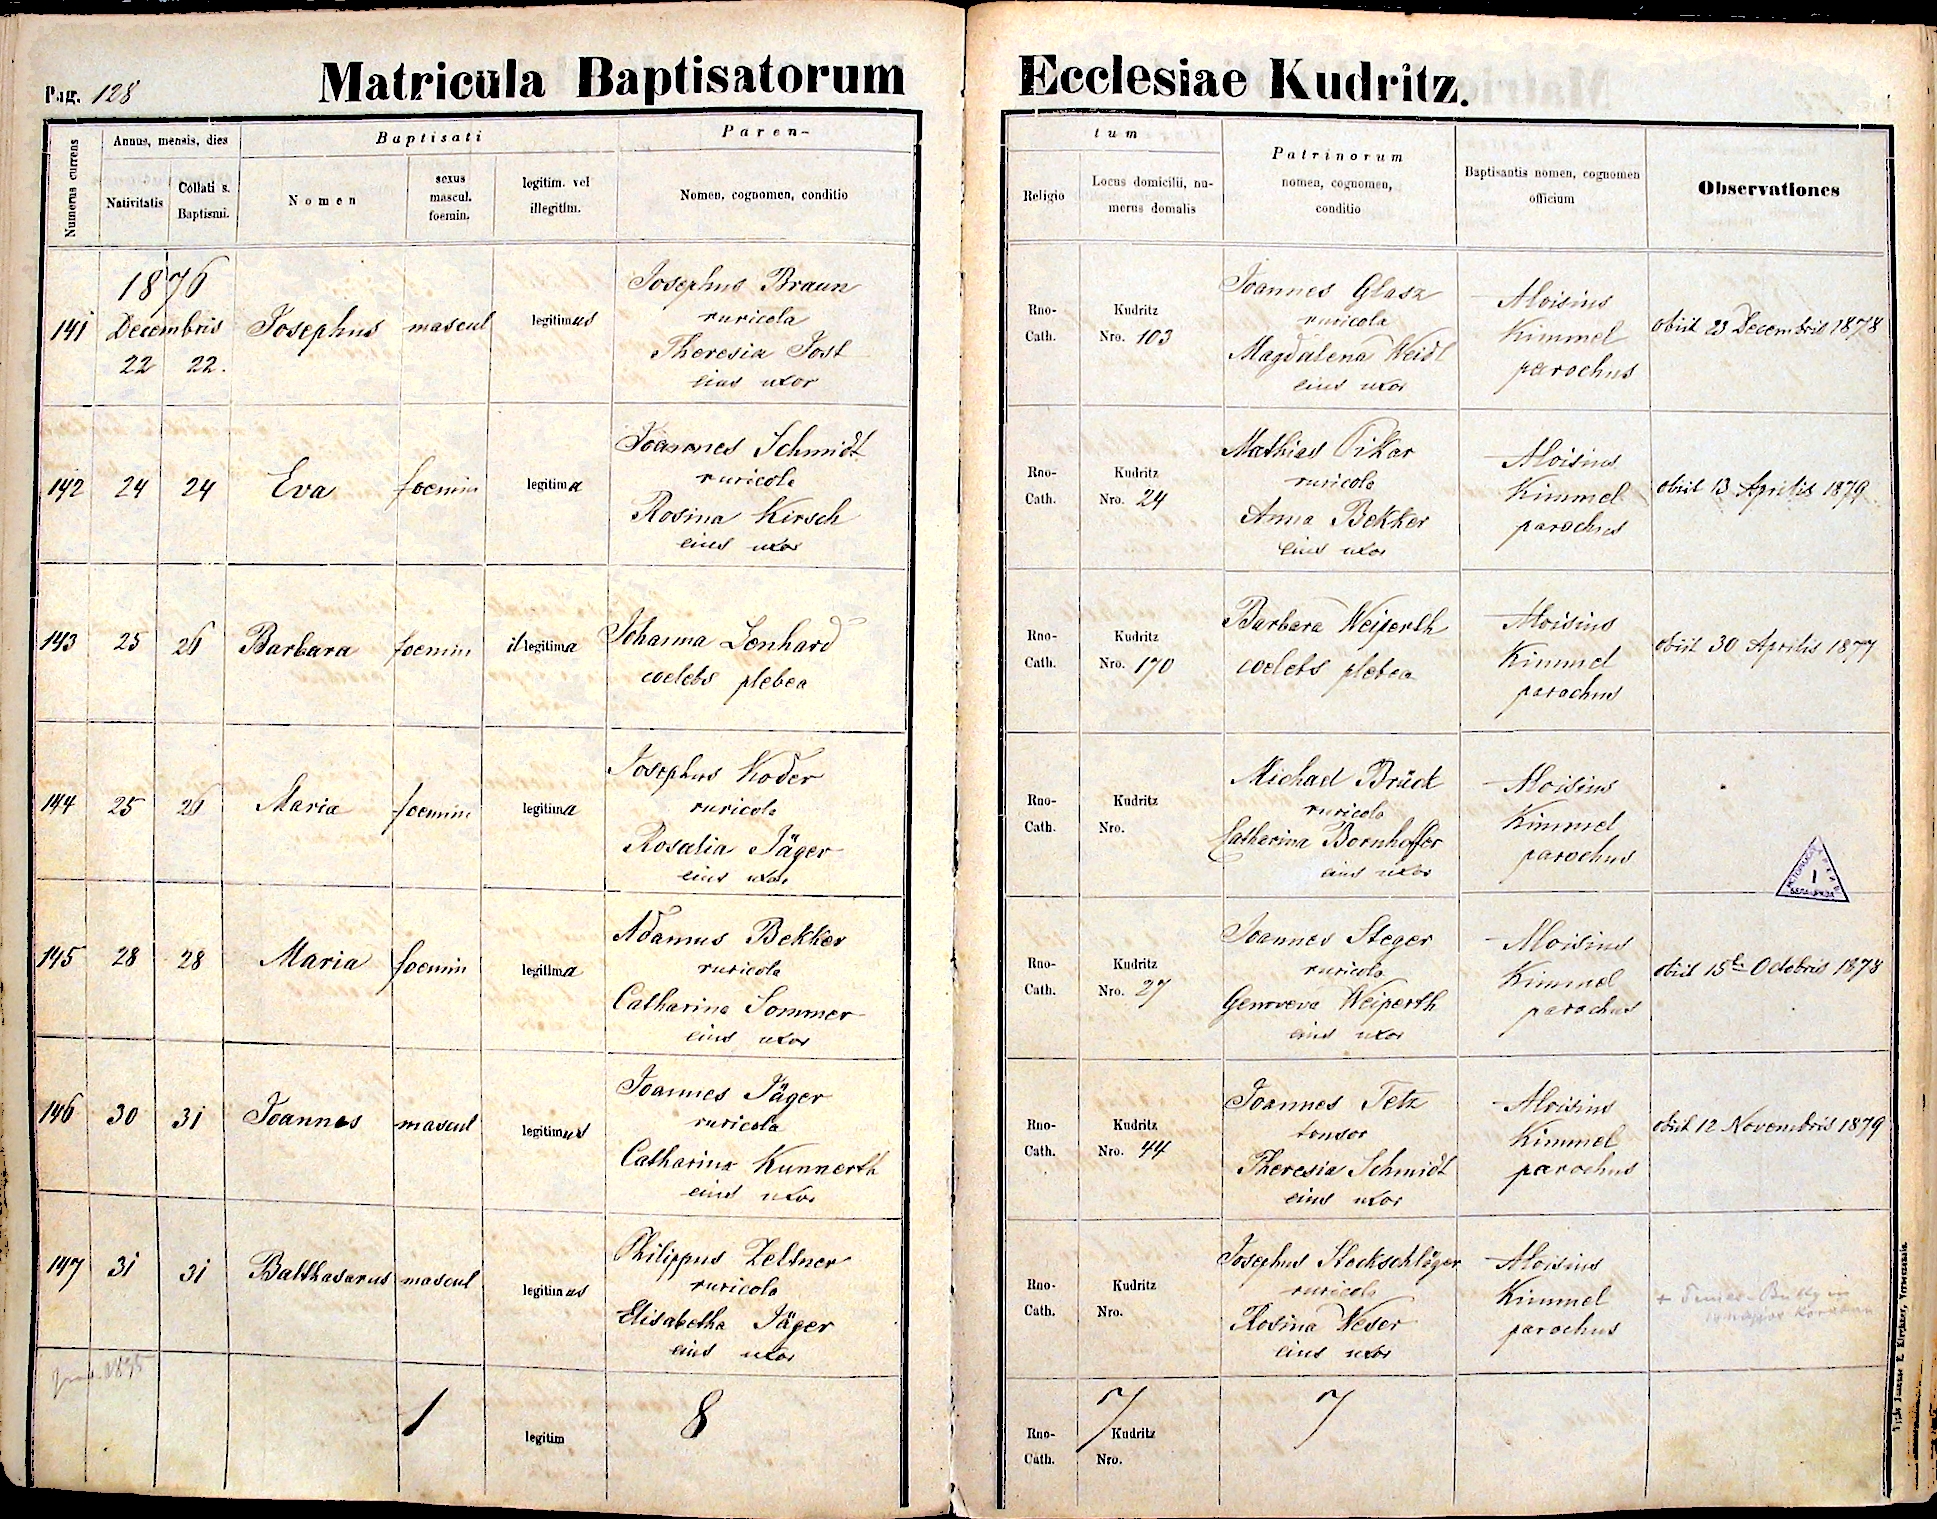 images/church_records/BIRTHS/1870-1879B/1876/128